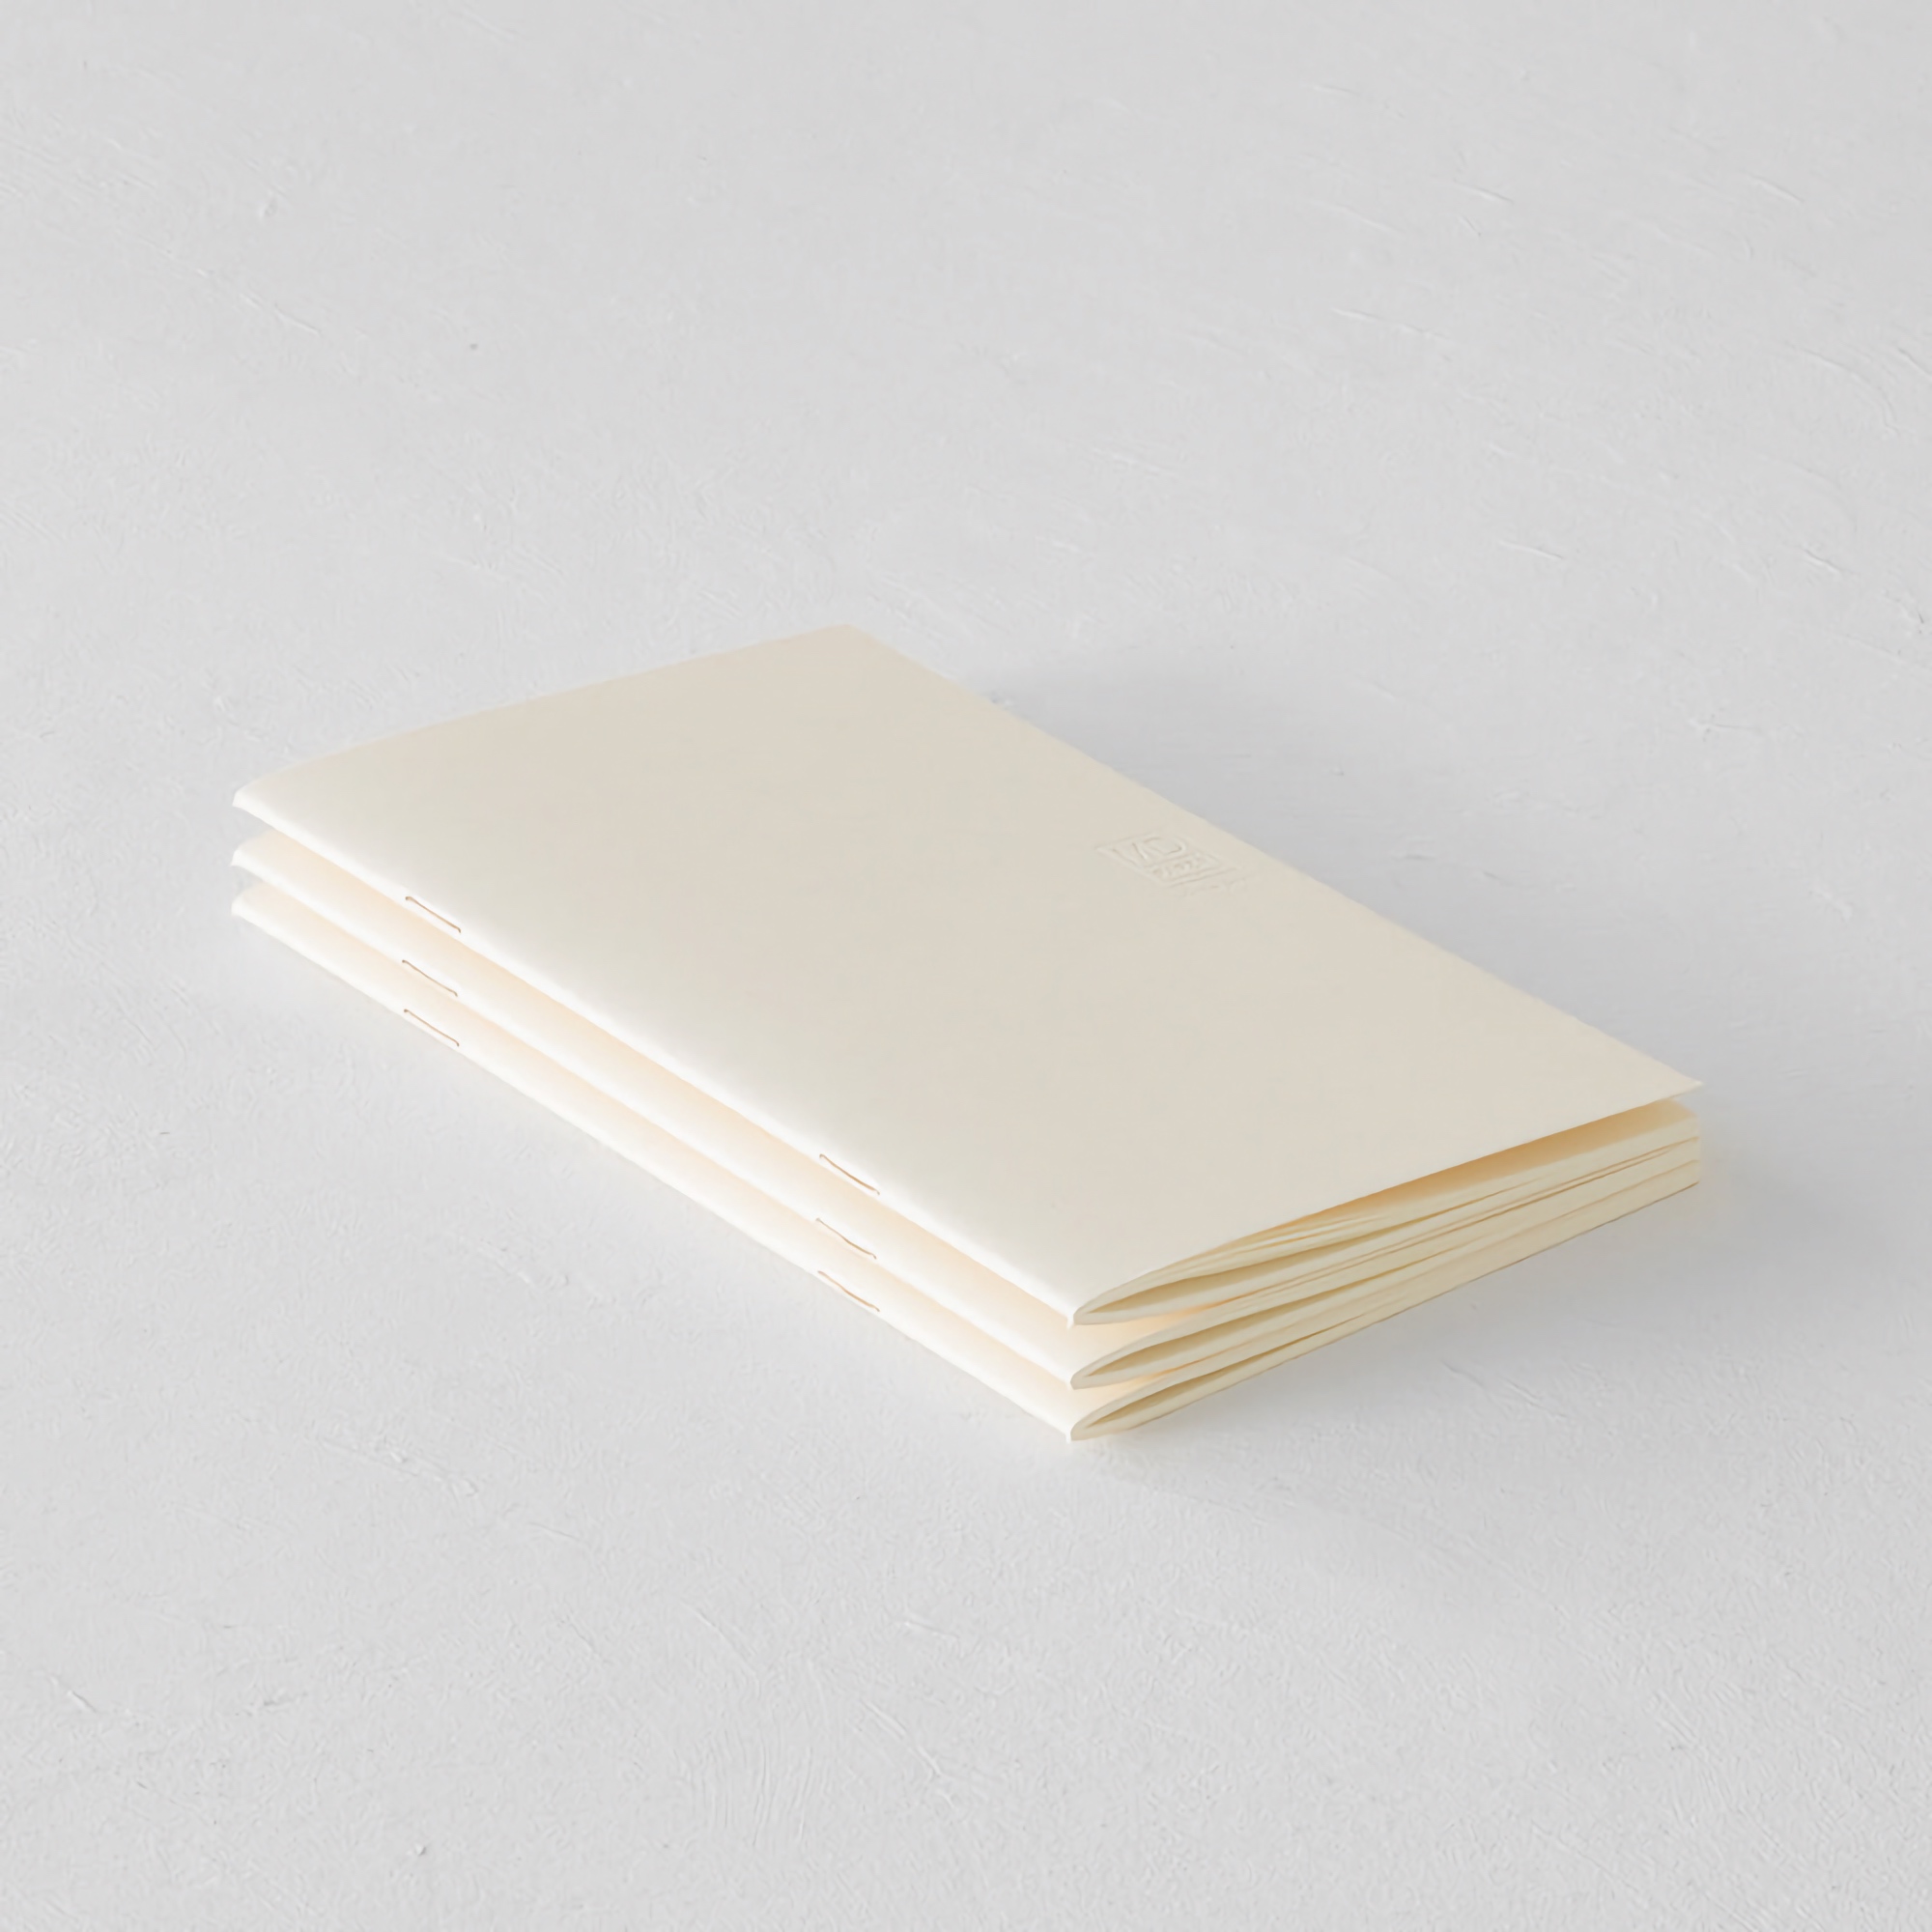 Midori MD Notebook Light [B6 Slim] Linjerad 3-pack